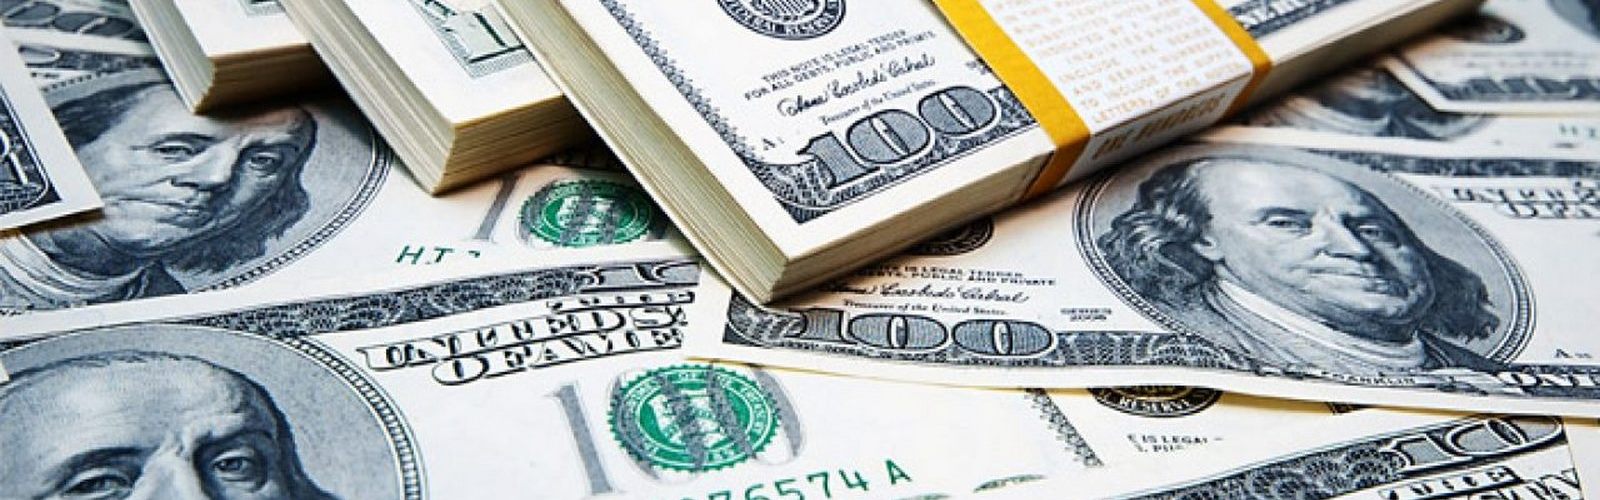 Buy Counterfeit US Dollars Online